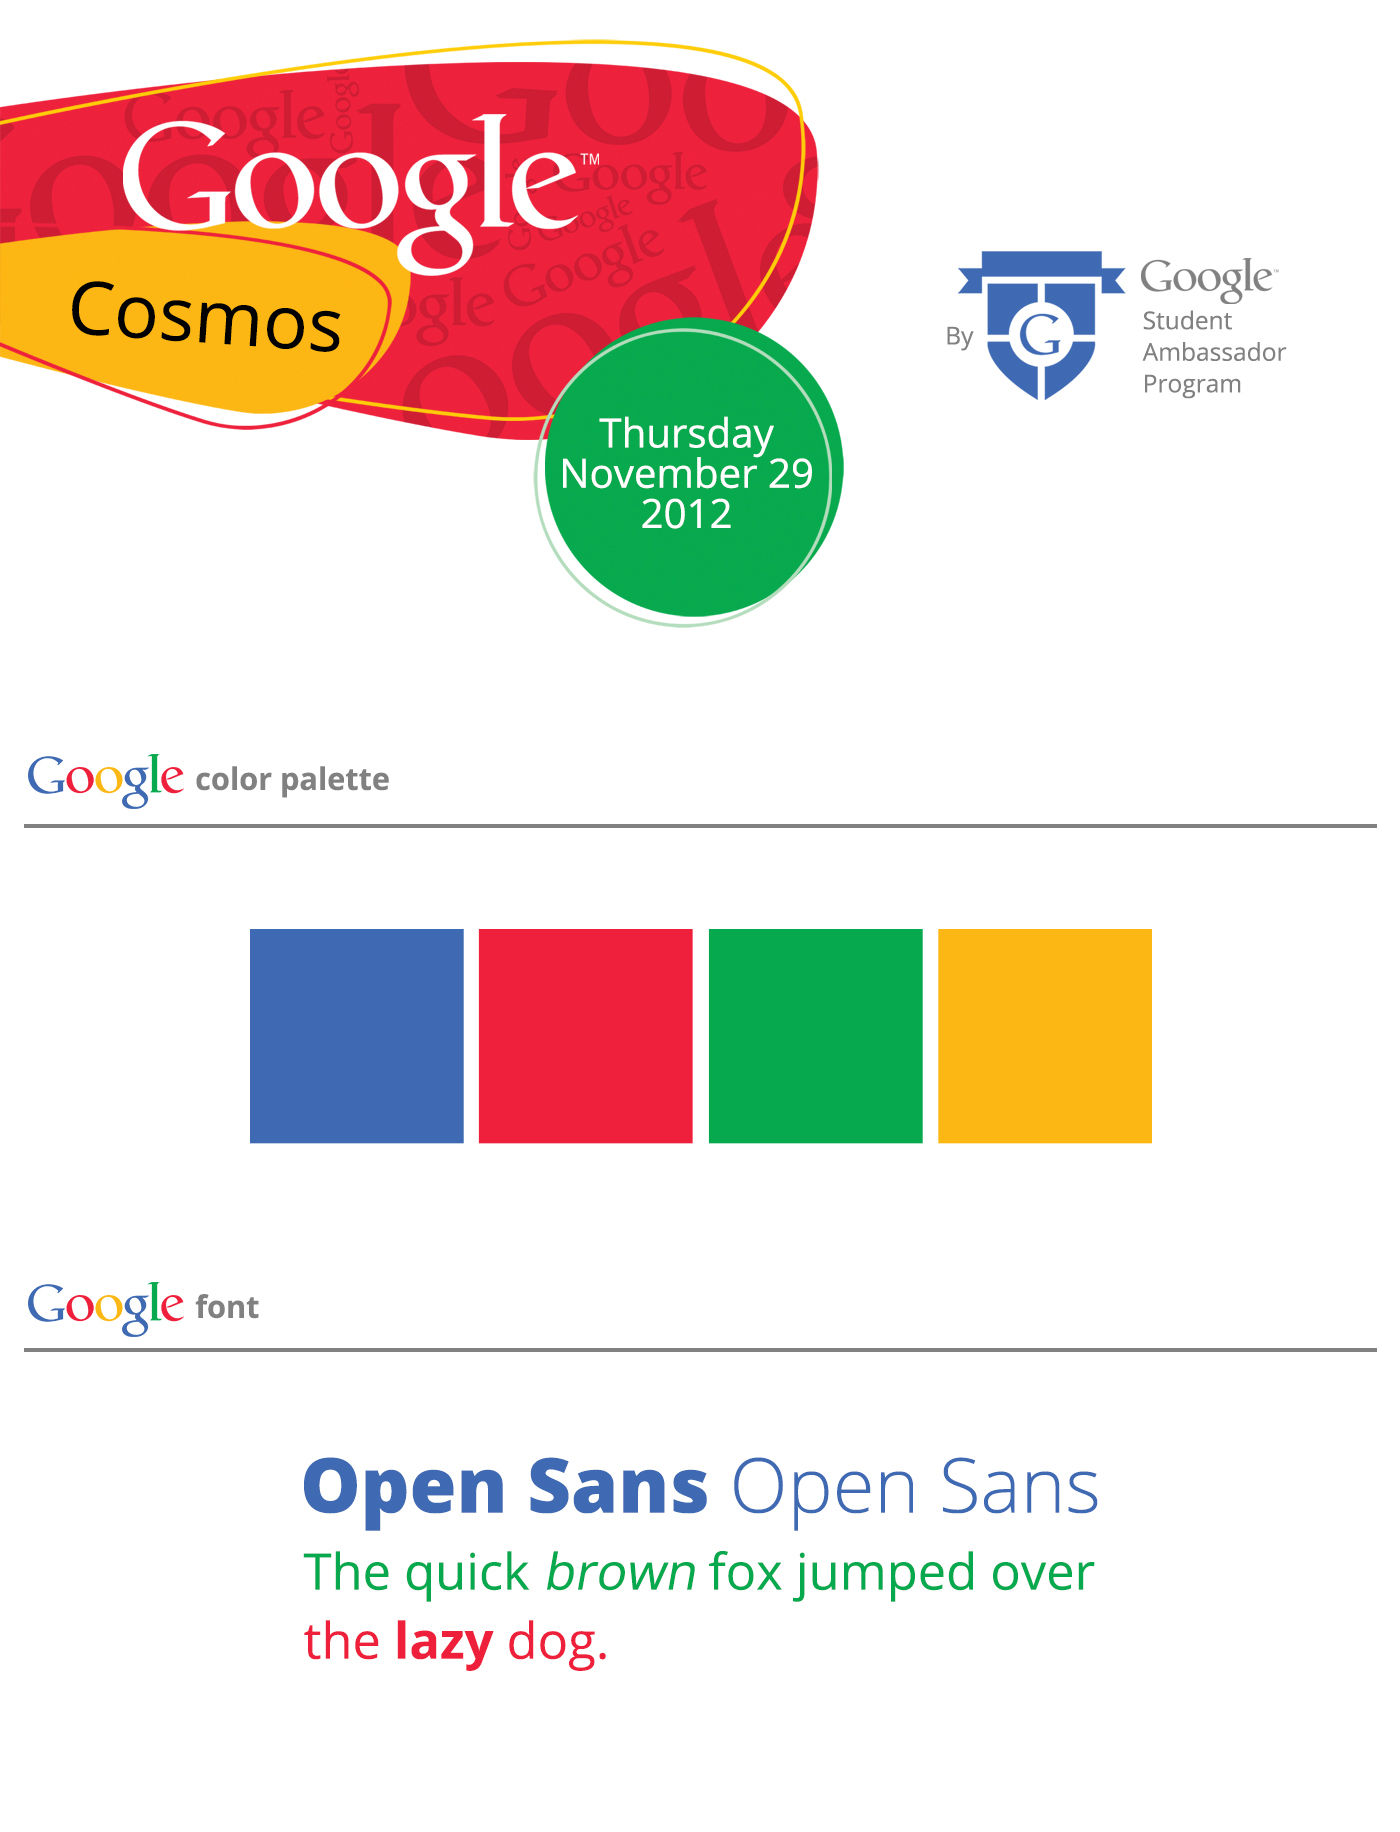 google student ambassador GSA cosmos colors colorful